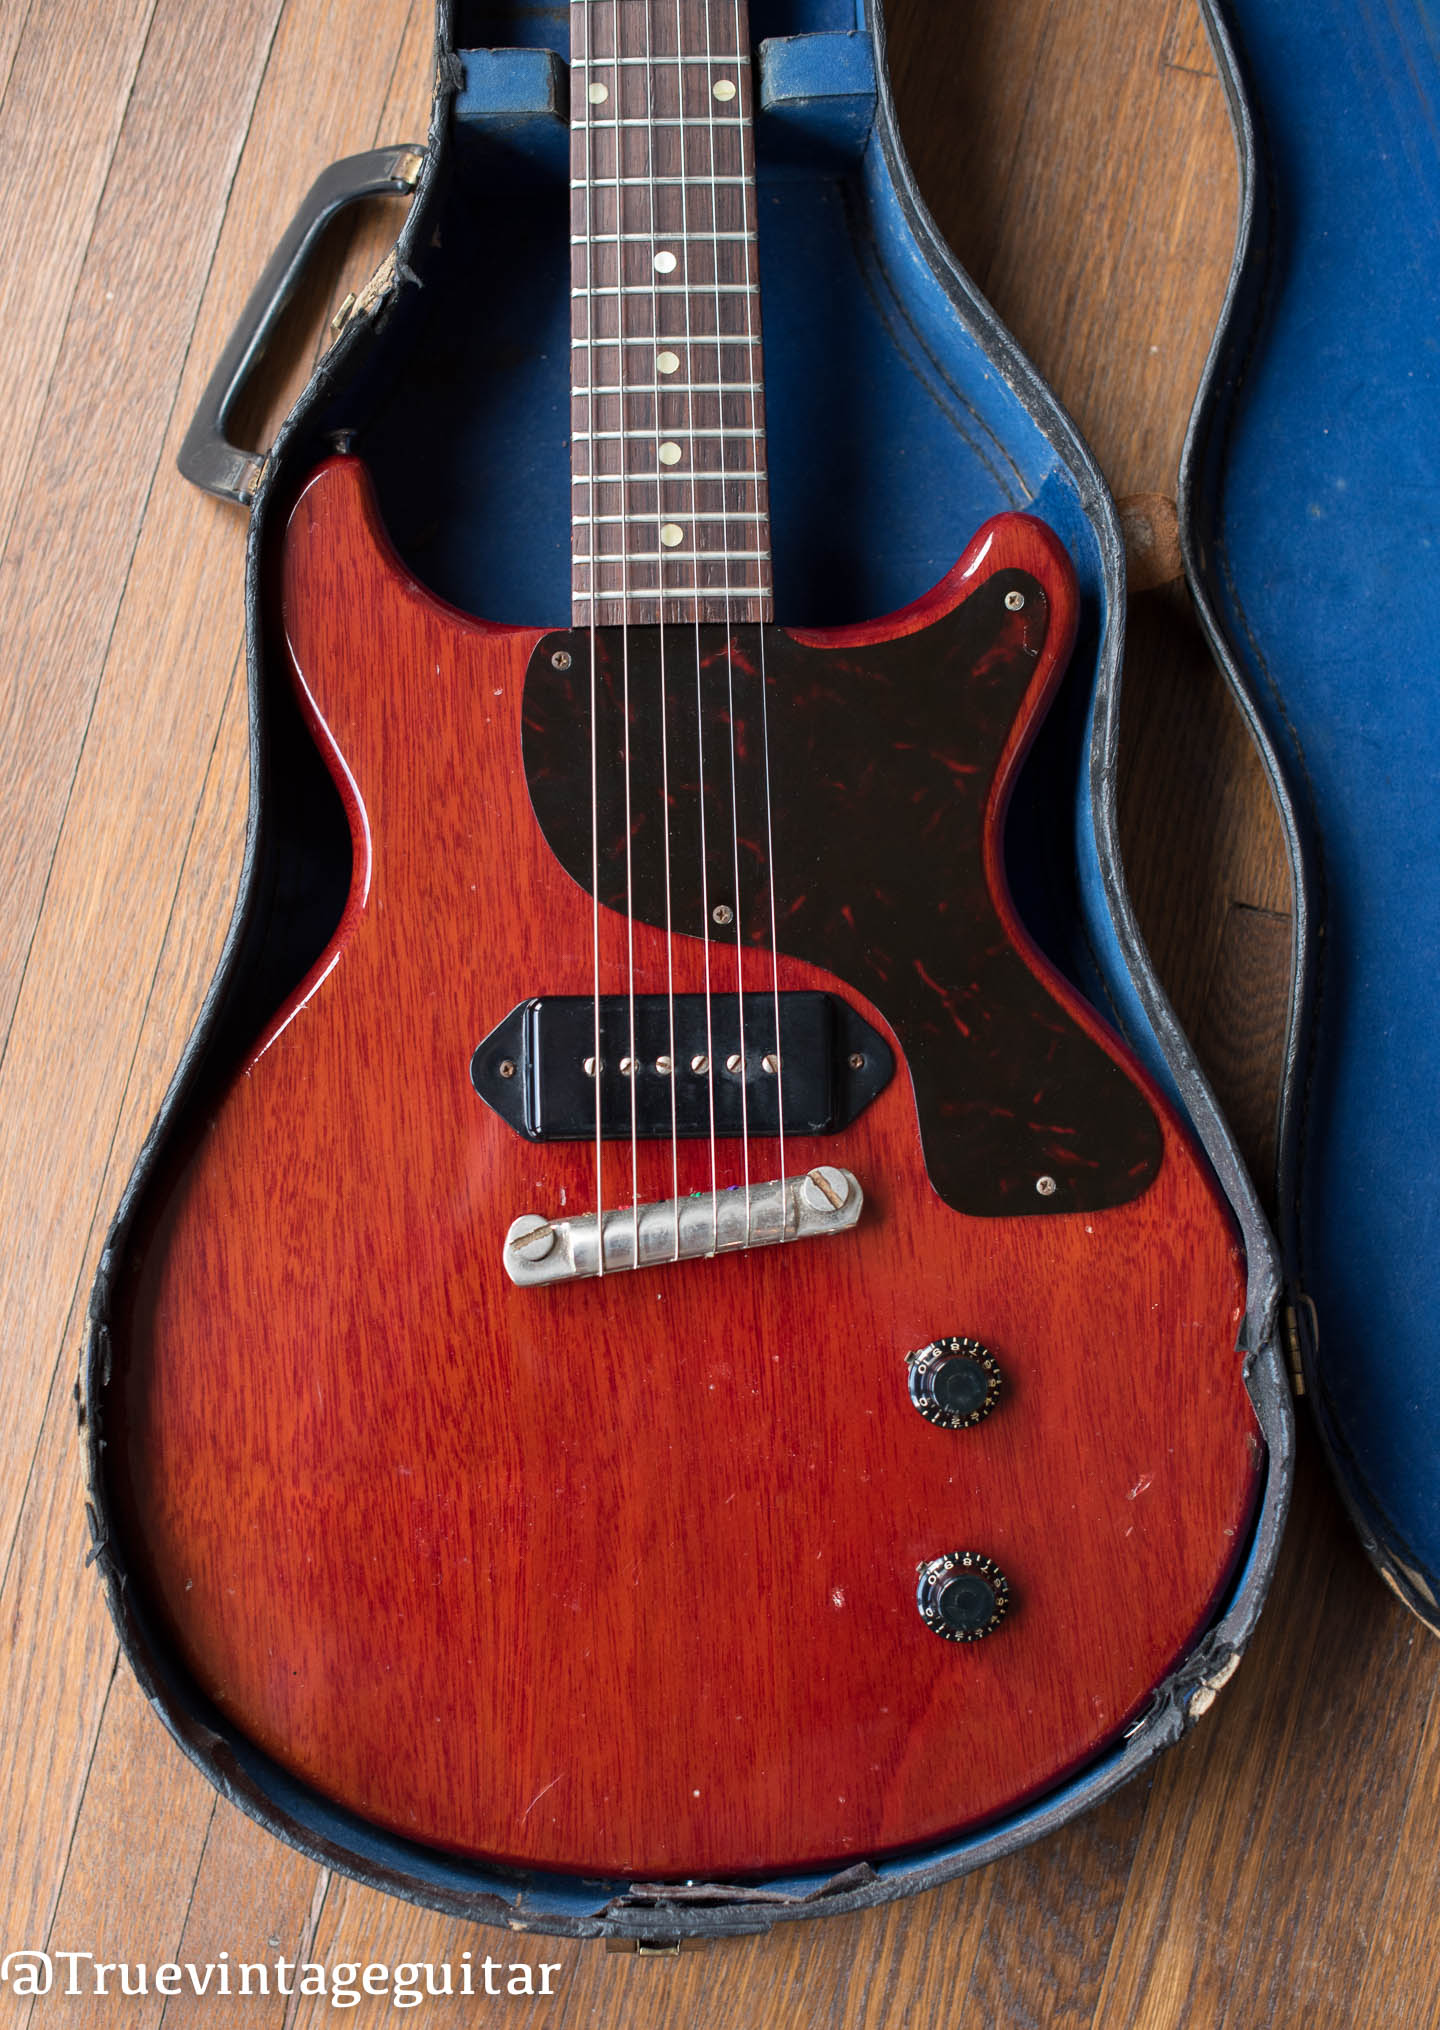 Vintage 1960 Gibson Les Paul Junior Cherry Red double cut guitar